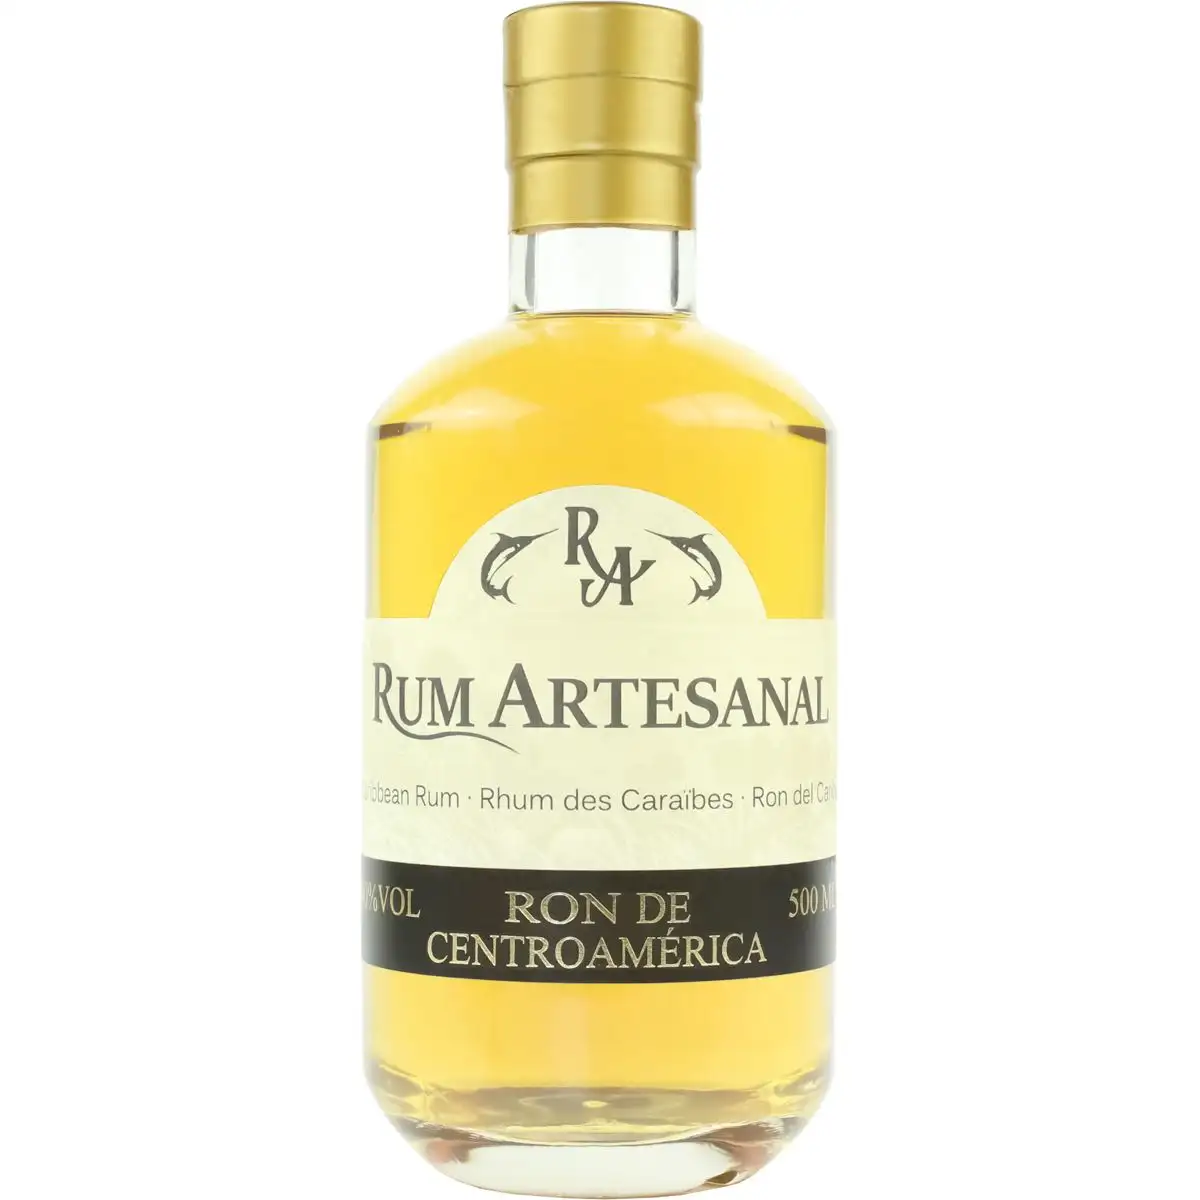 Image of the front of the bottle of the rum Rum Artesanal Ron de Centroamérica